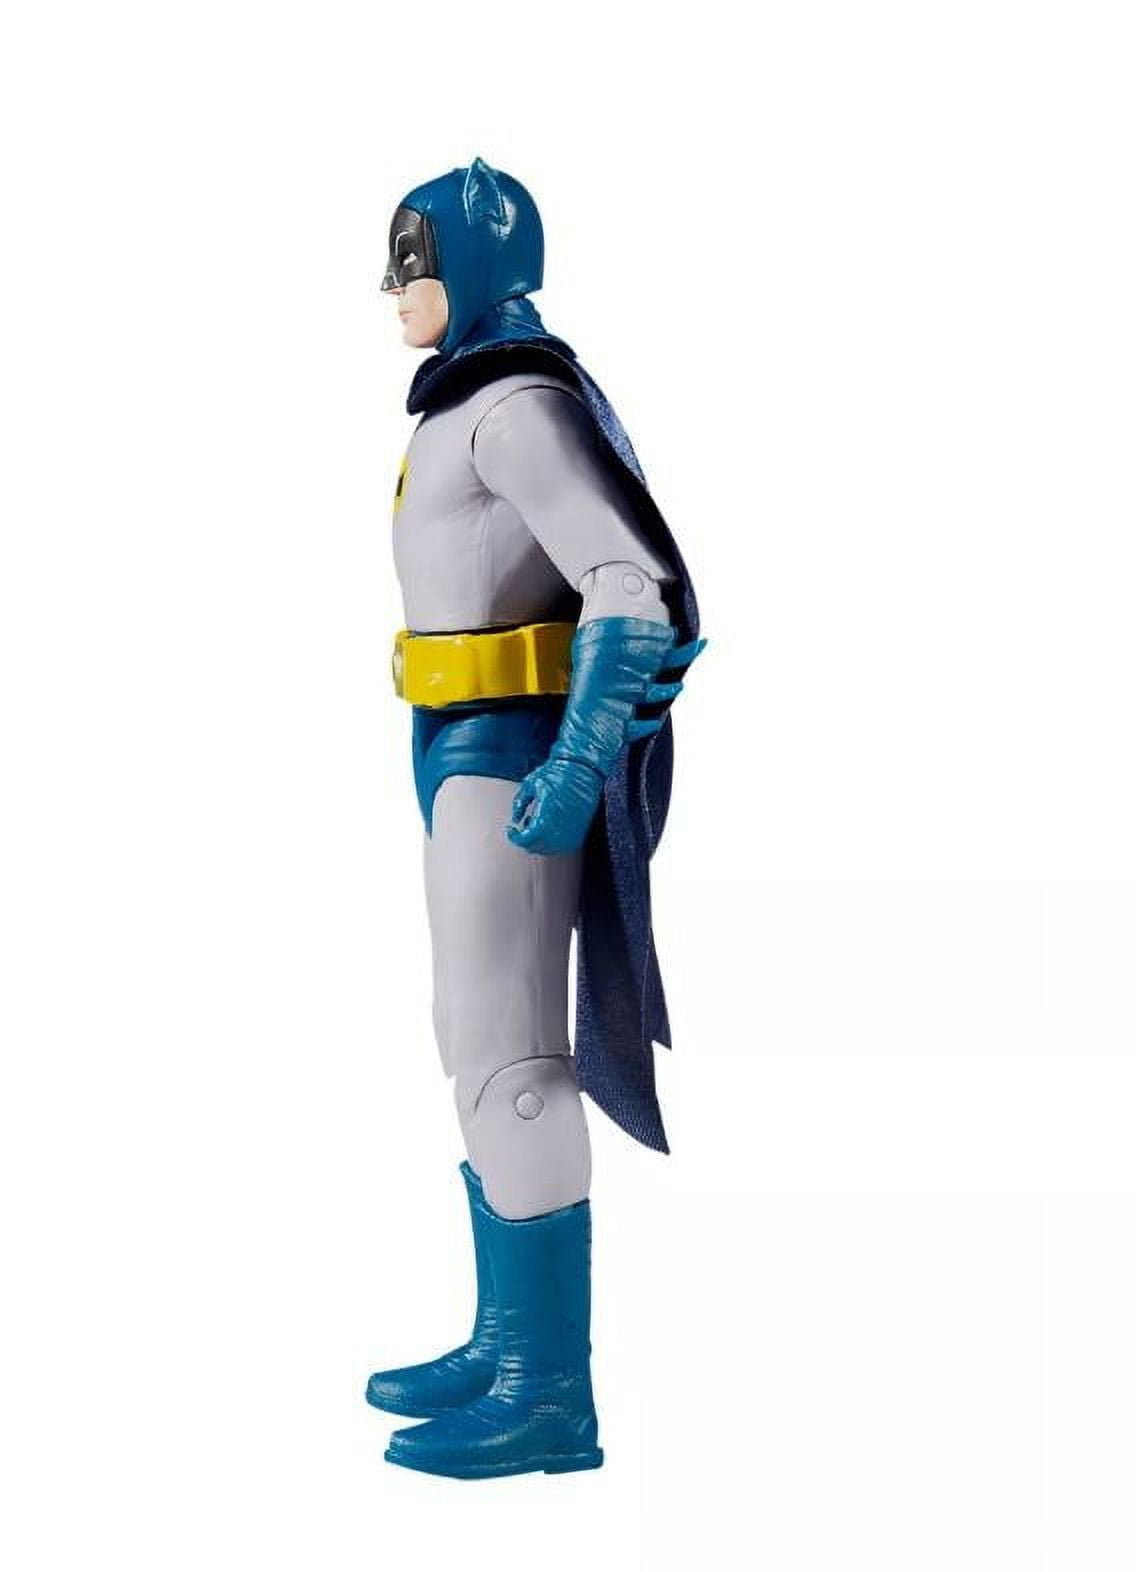 DC Retro - Figurine Batman 66 Batman 15 cm - Figurines - LDLC